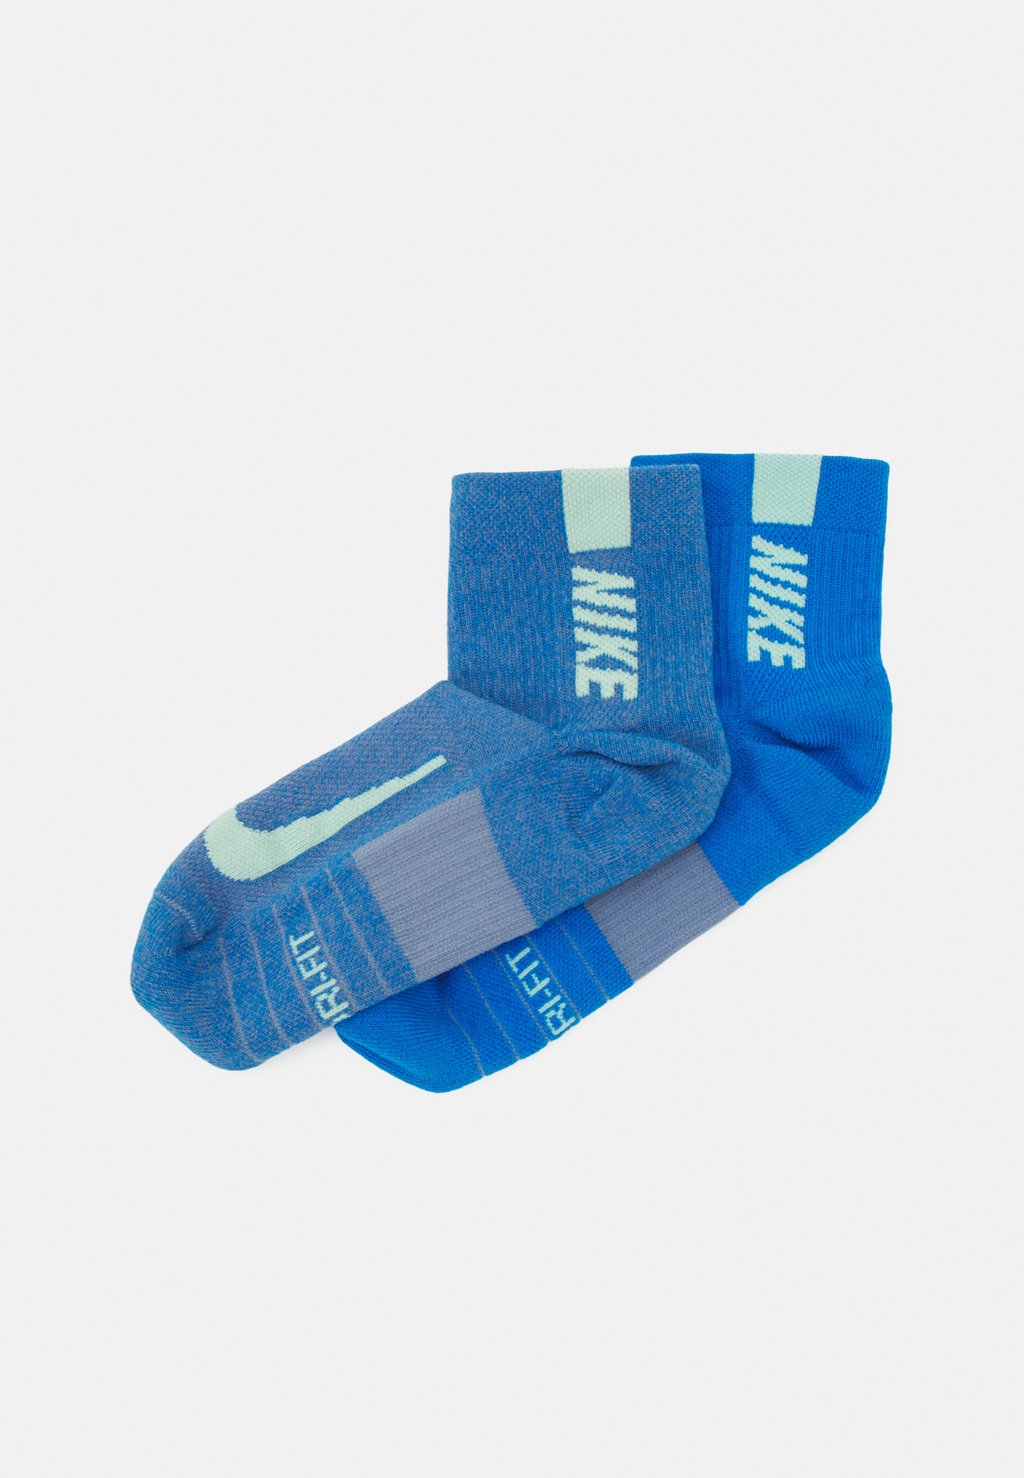 Спортивные носки Ankle Unisex 2 Pack Nike, цвет photo blue ashen slate(vapor green)/photo blue(vapor green) серьги blue green